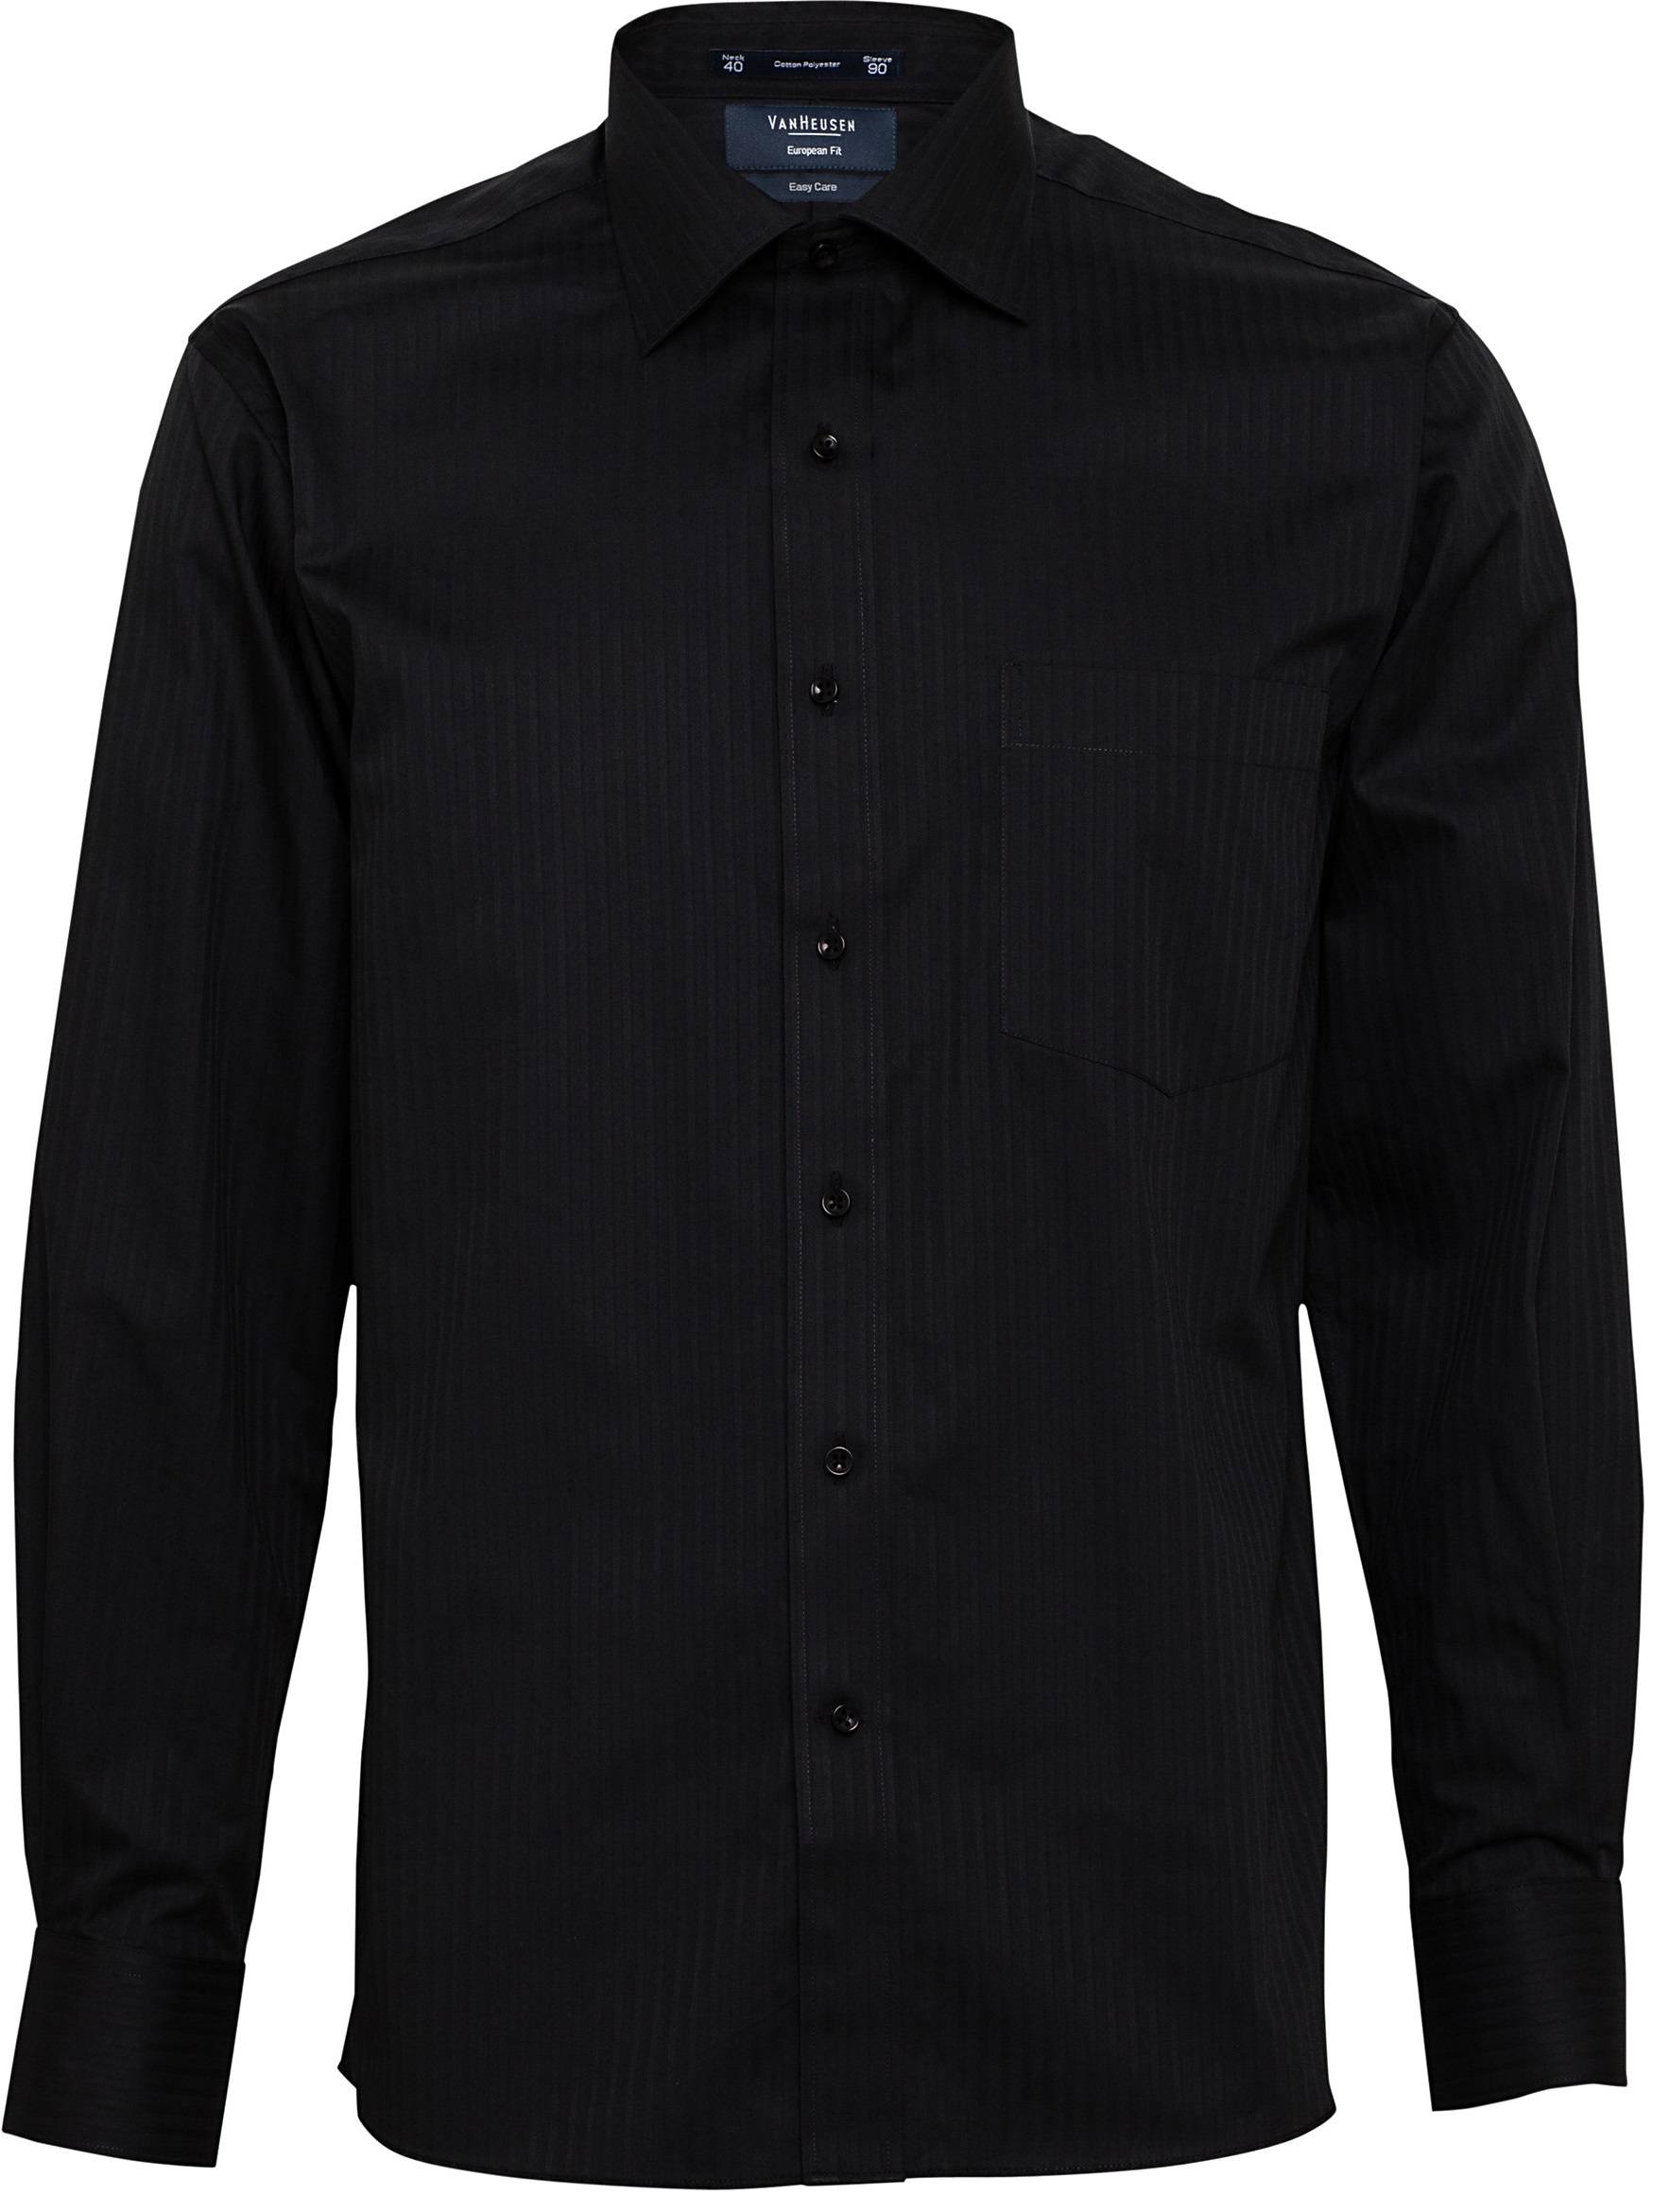 Plain Black Shirt | Van Heusen European Fit Save up to 25%